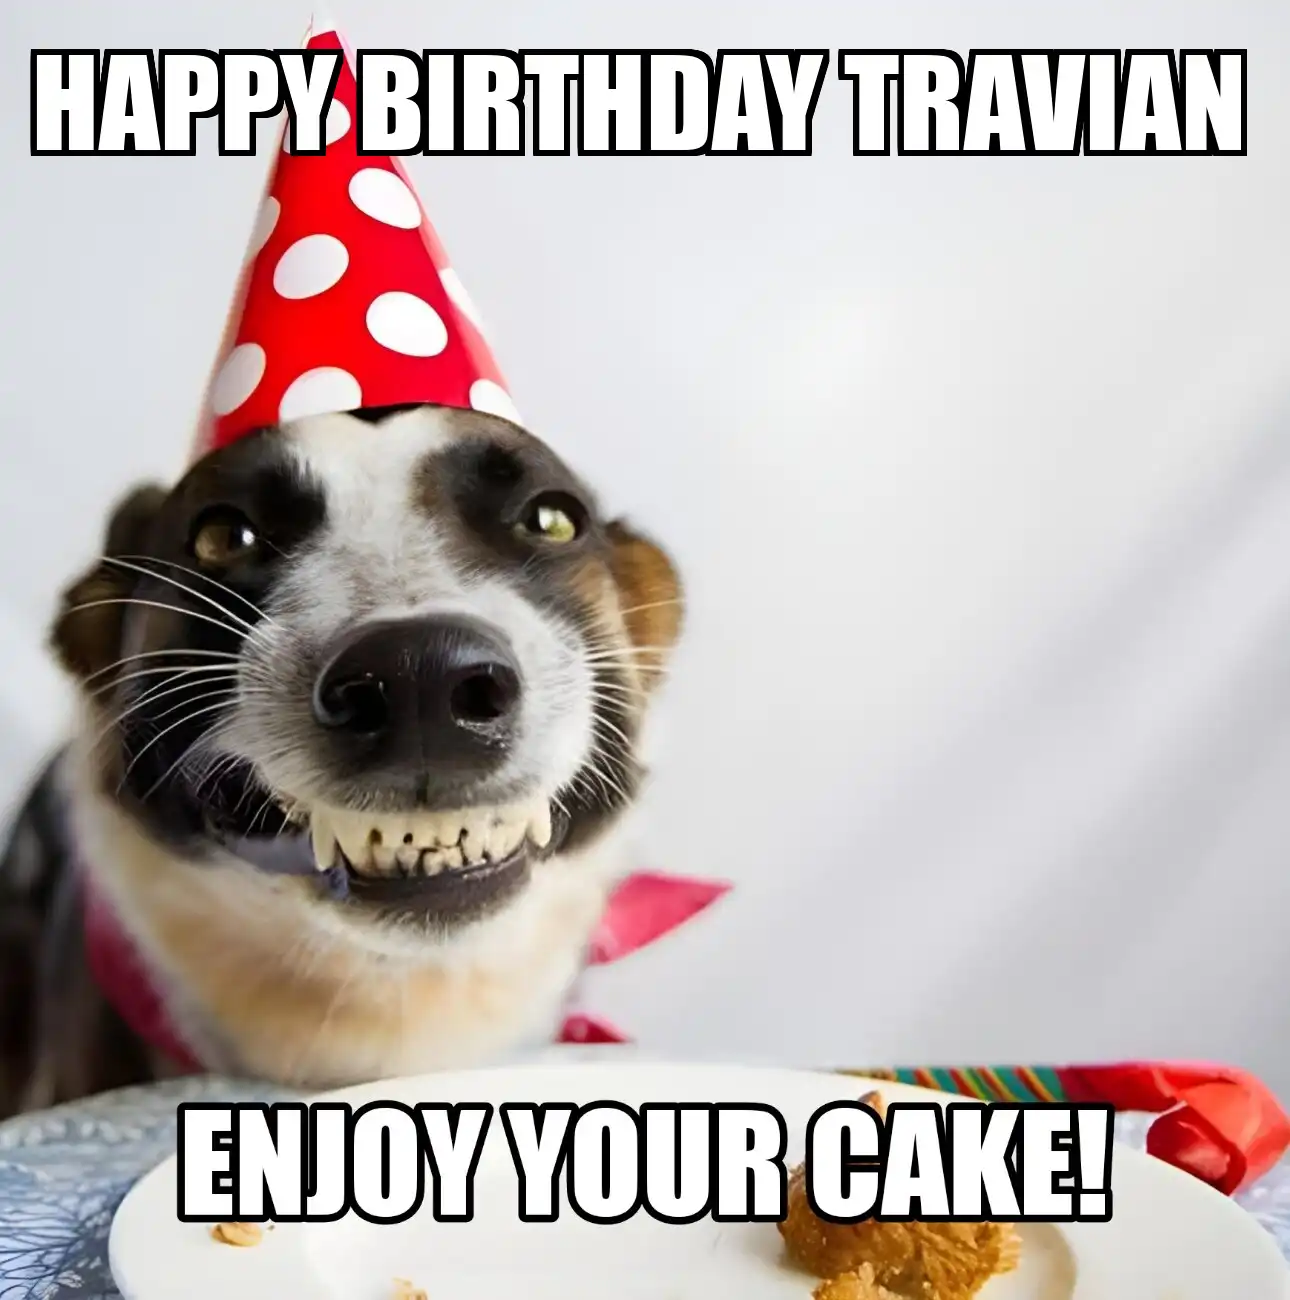 Happy Birthday Travian Enjoy Your Cake Dog Meme